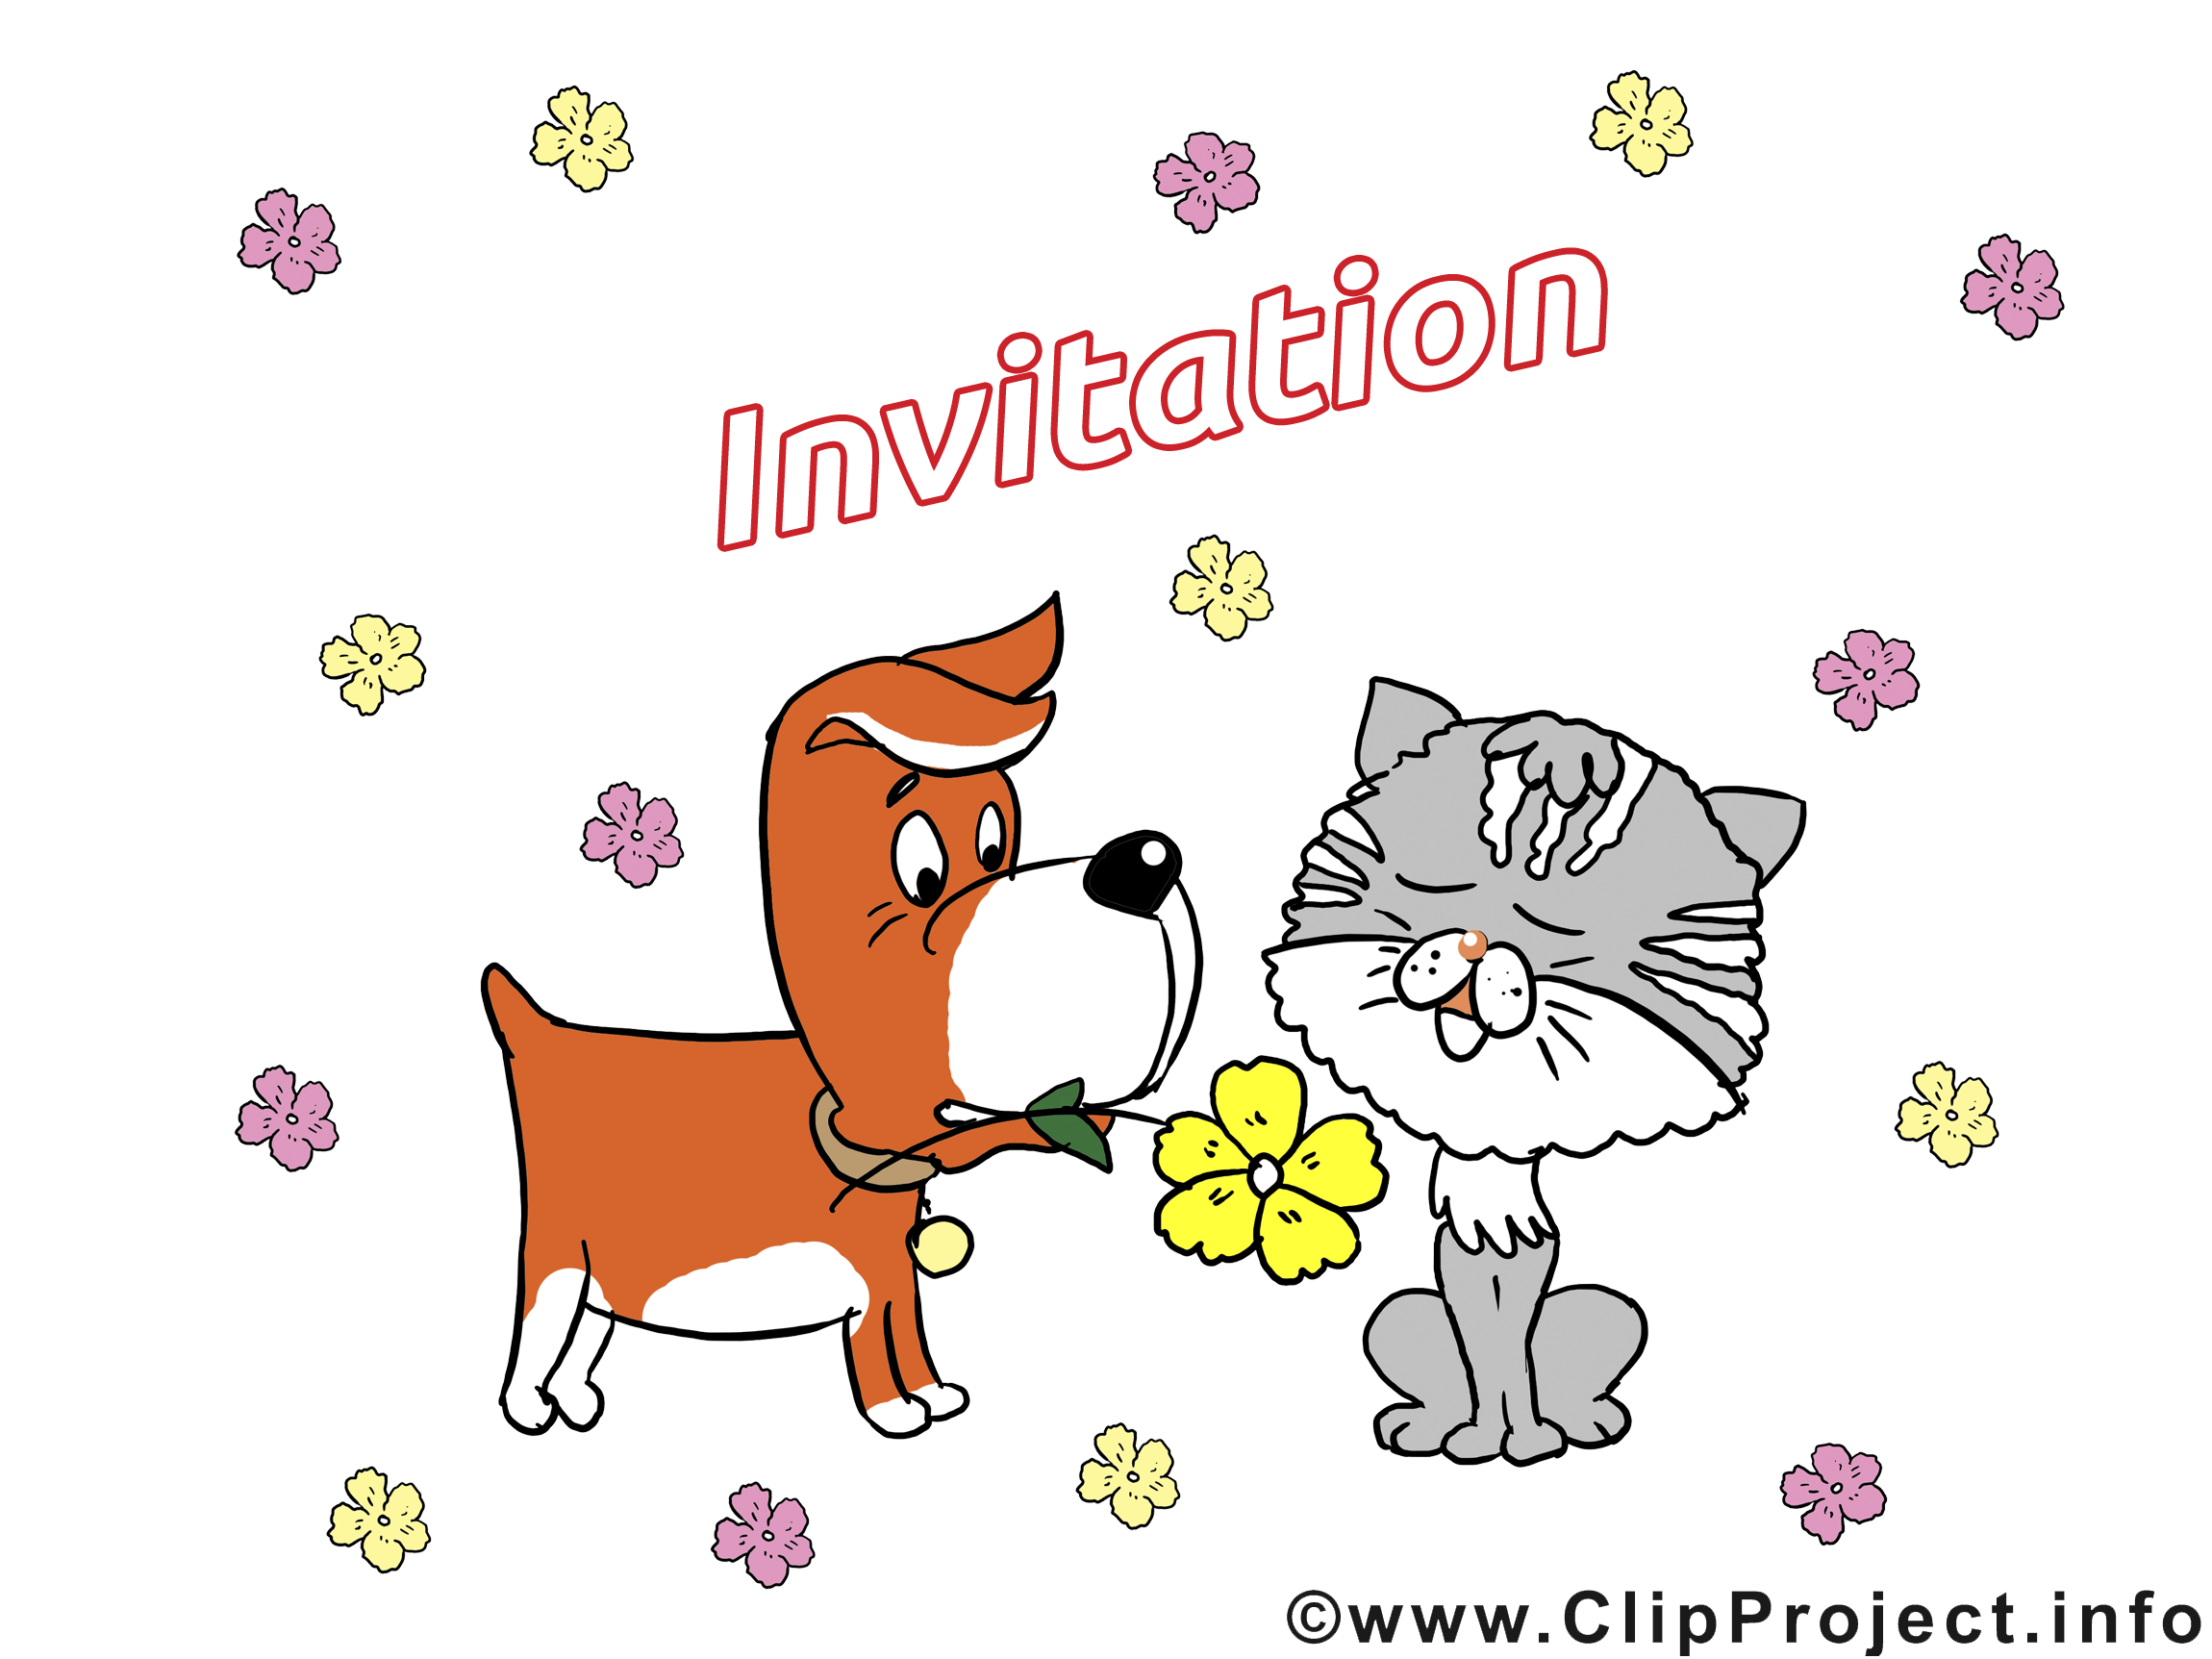 Chien chat image gratuite - Invitation illustration